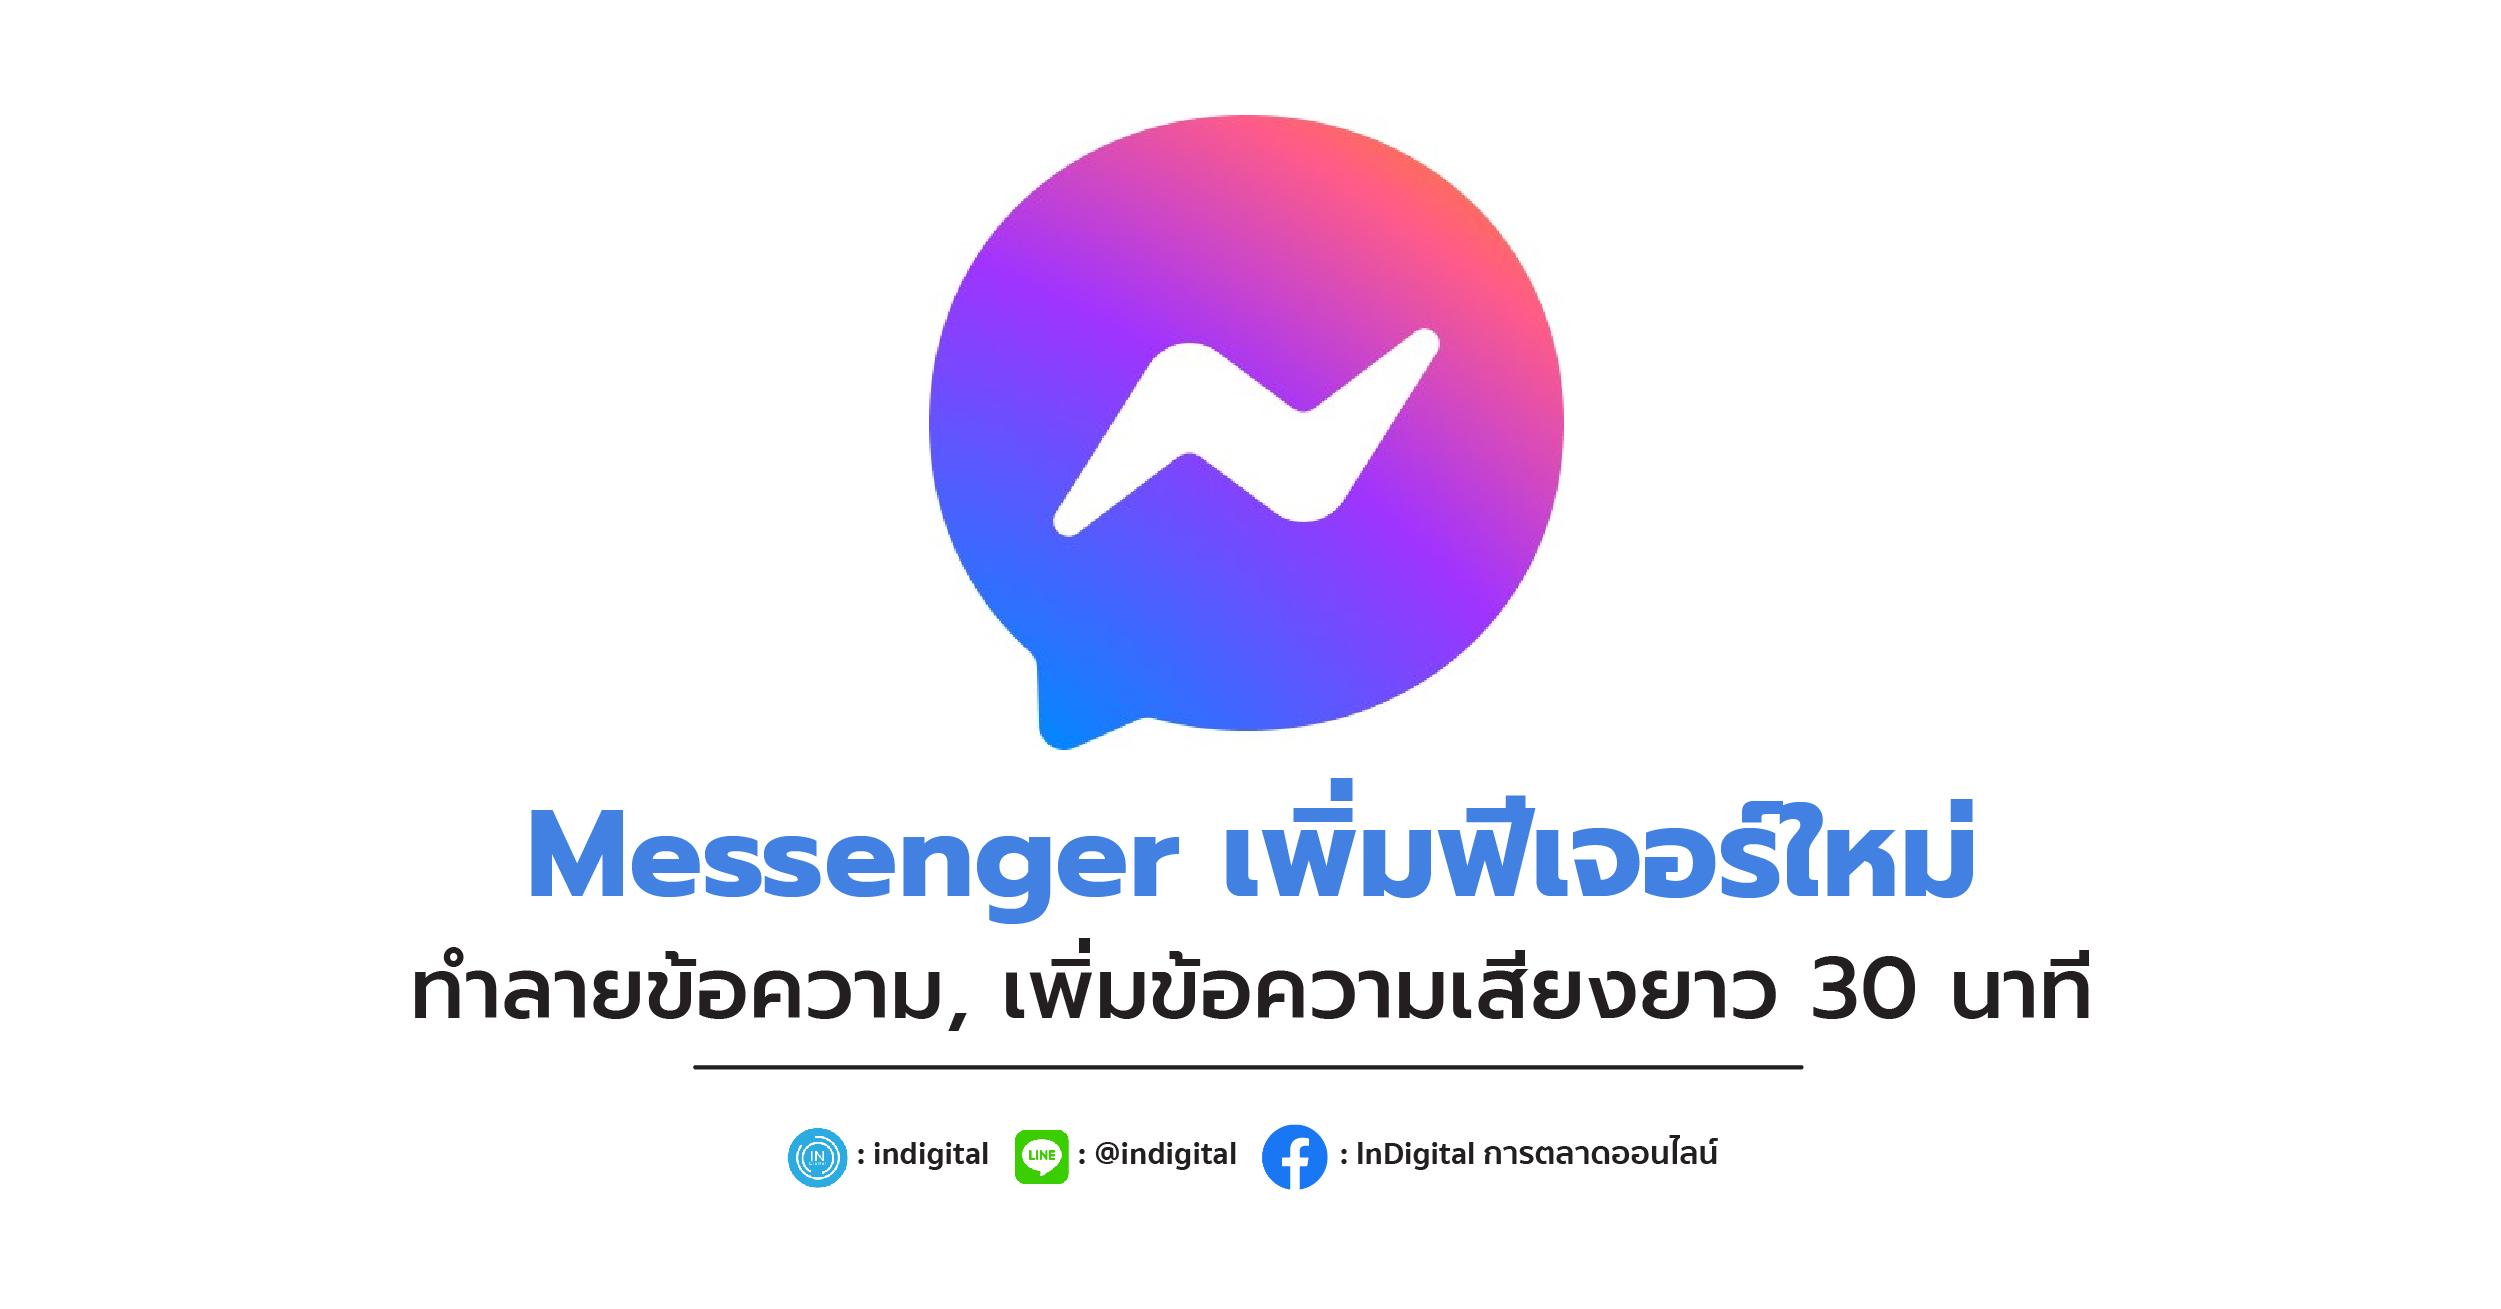 Messenger เพิ่มฟีเจอร์ใหม่ ทำลายข้อความ, เพิ่มข้อความเสียงยาว 30 นาที